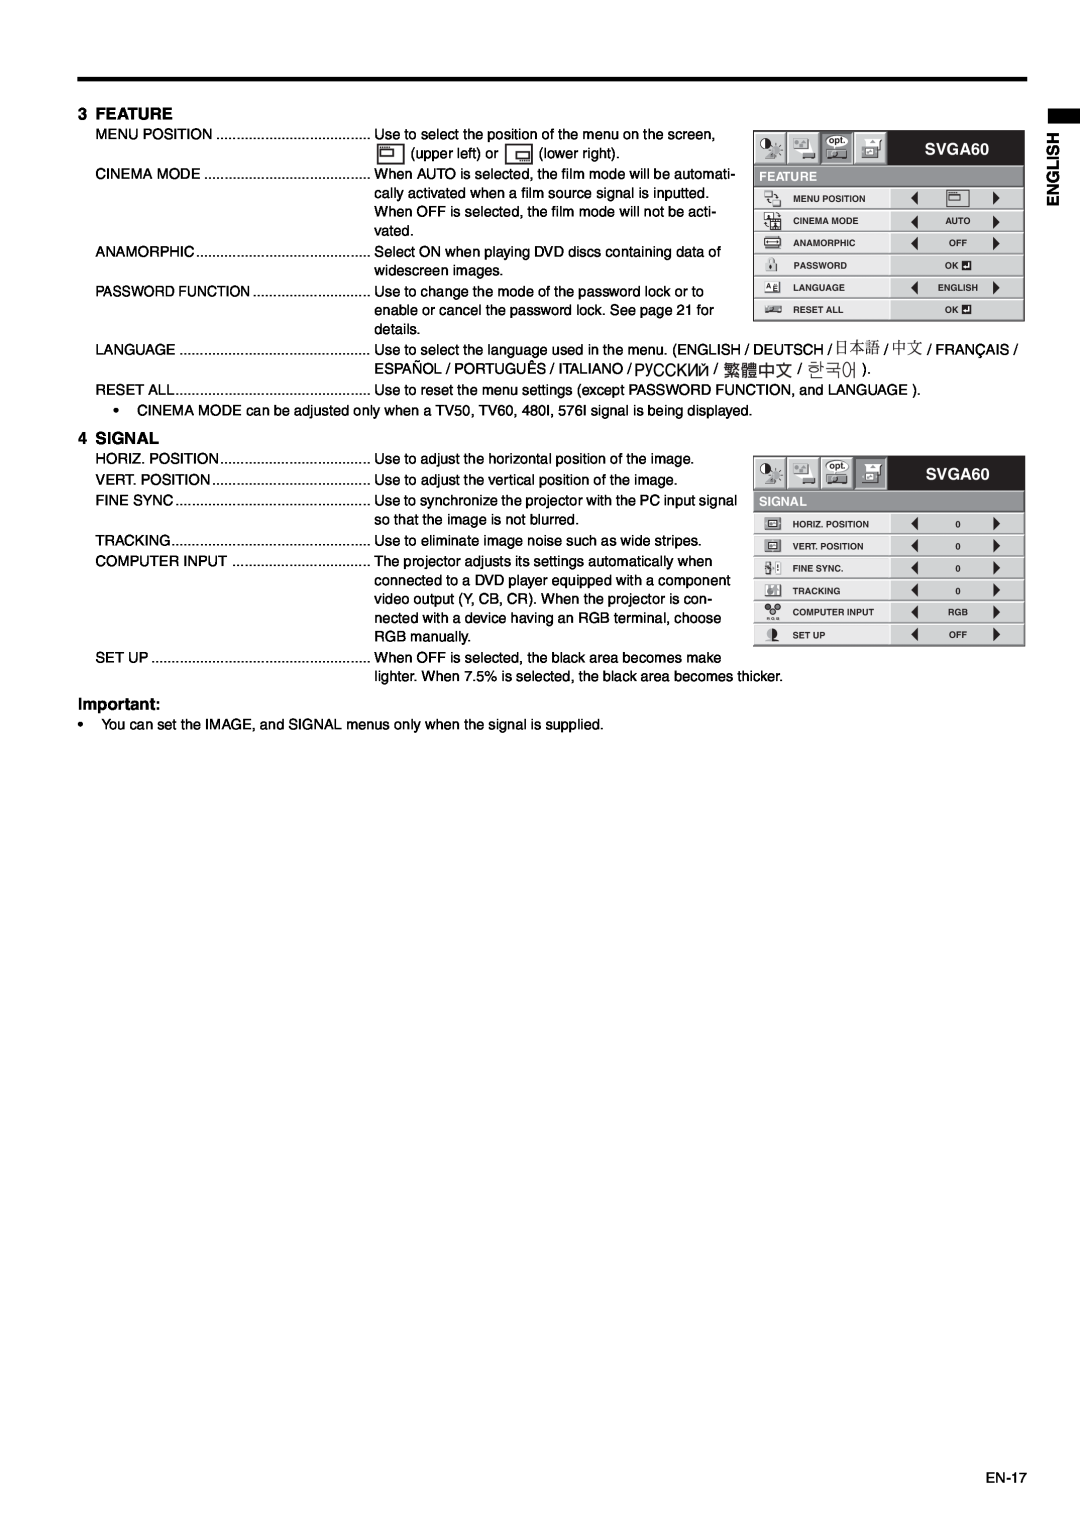 Mitsubishi Electronics SD105U user manual Feature, Signal, English, SVGA60 